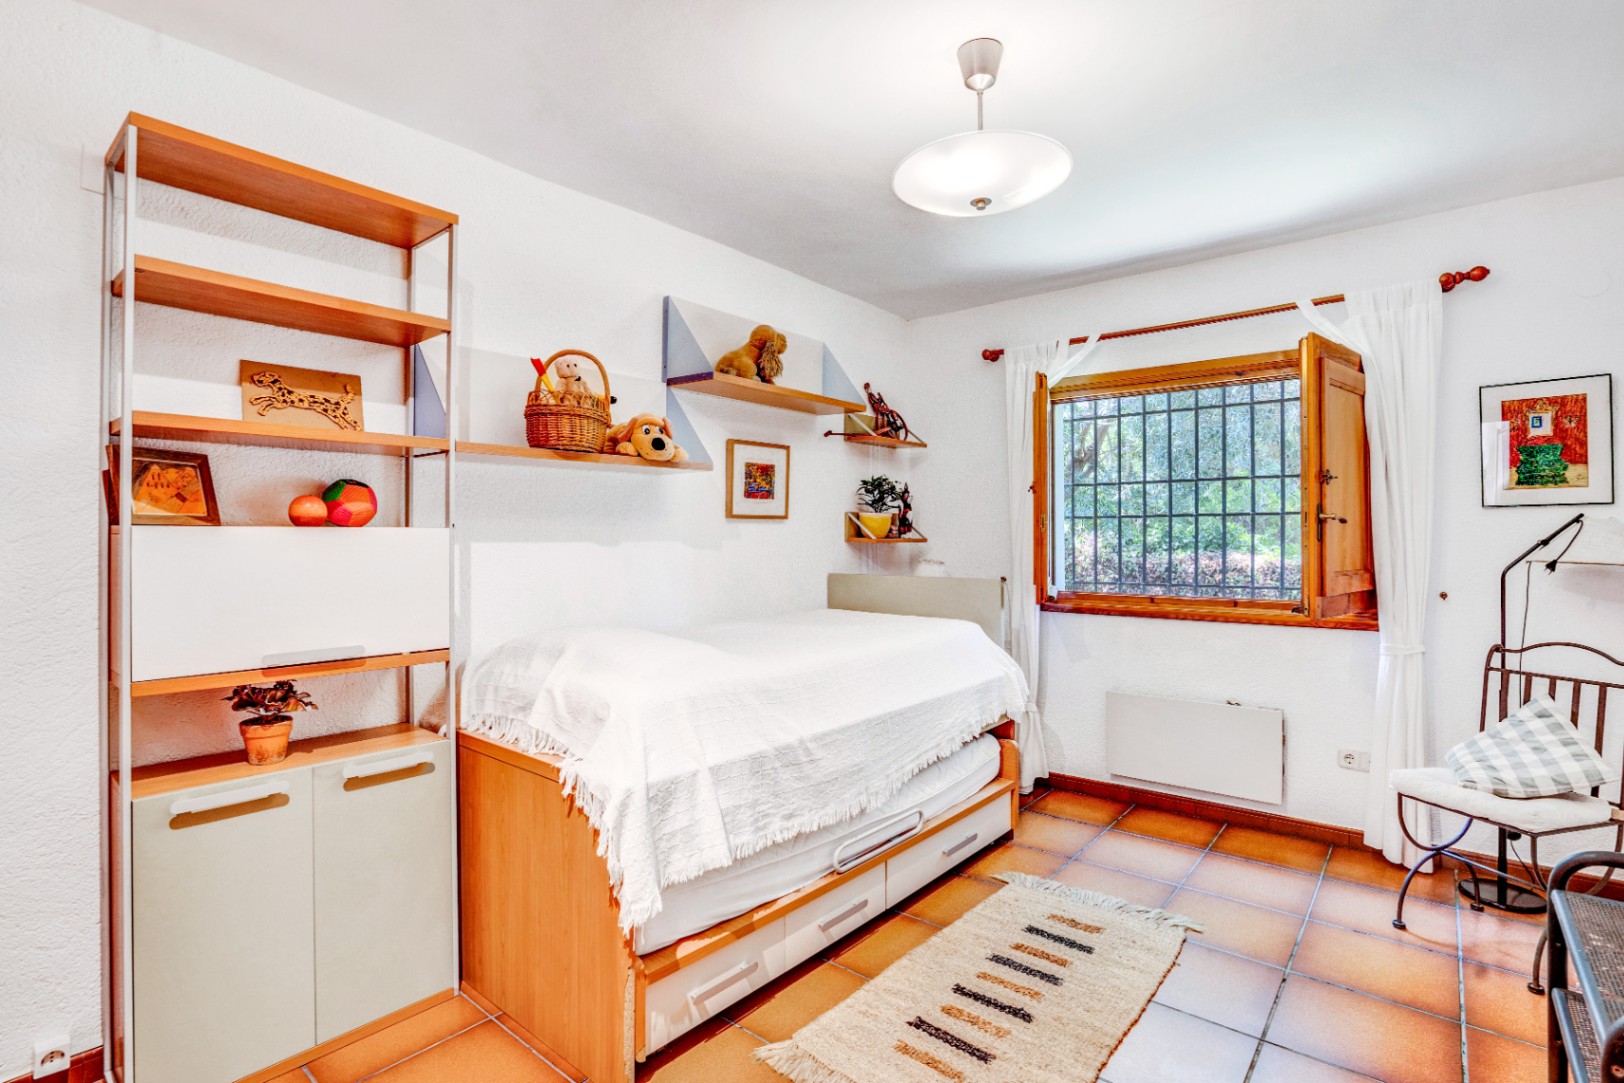 Villa te koop in Tosalet de Javea - Groot perceel van 1950m2 - 5 slaapkamers en alles op één verdieping